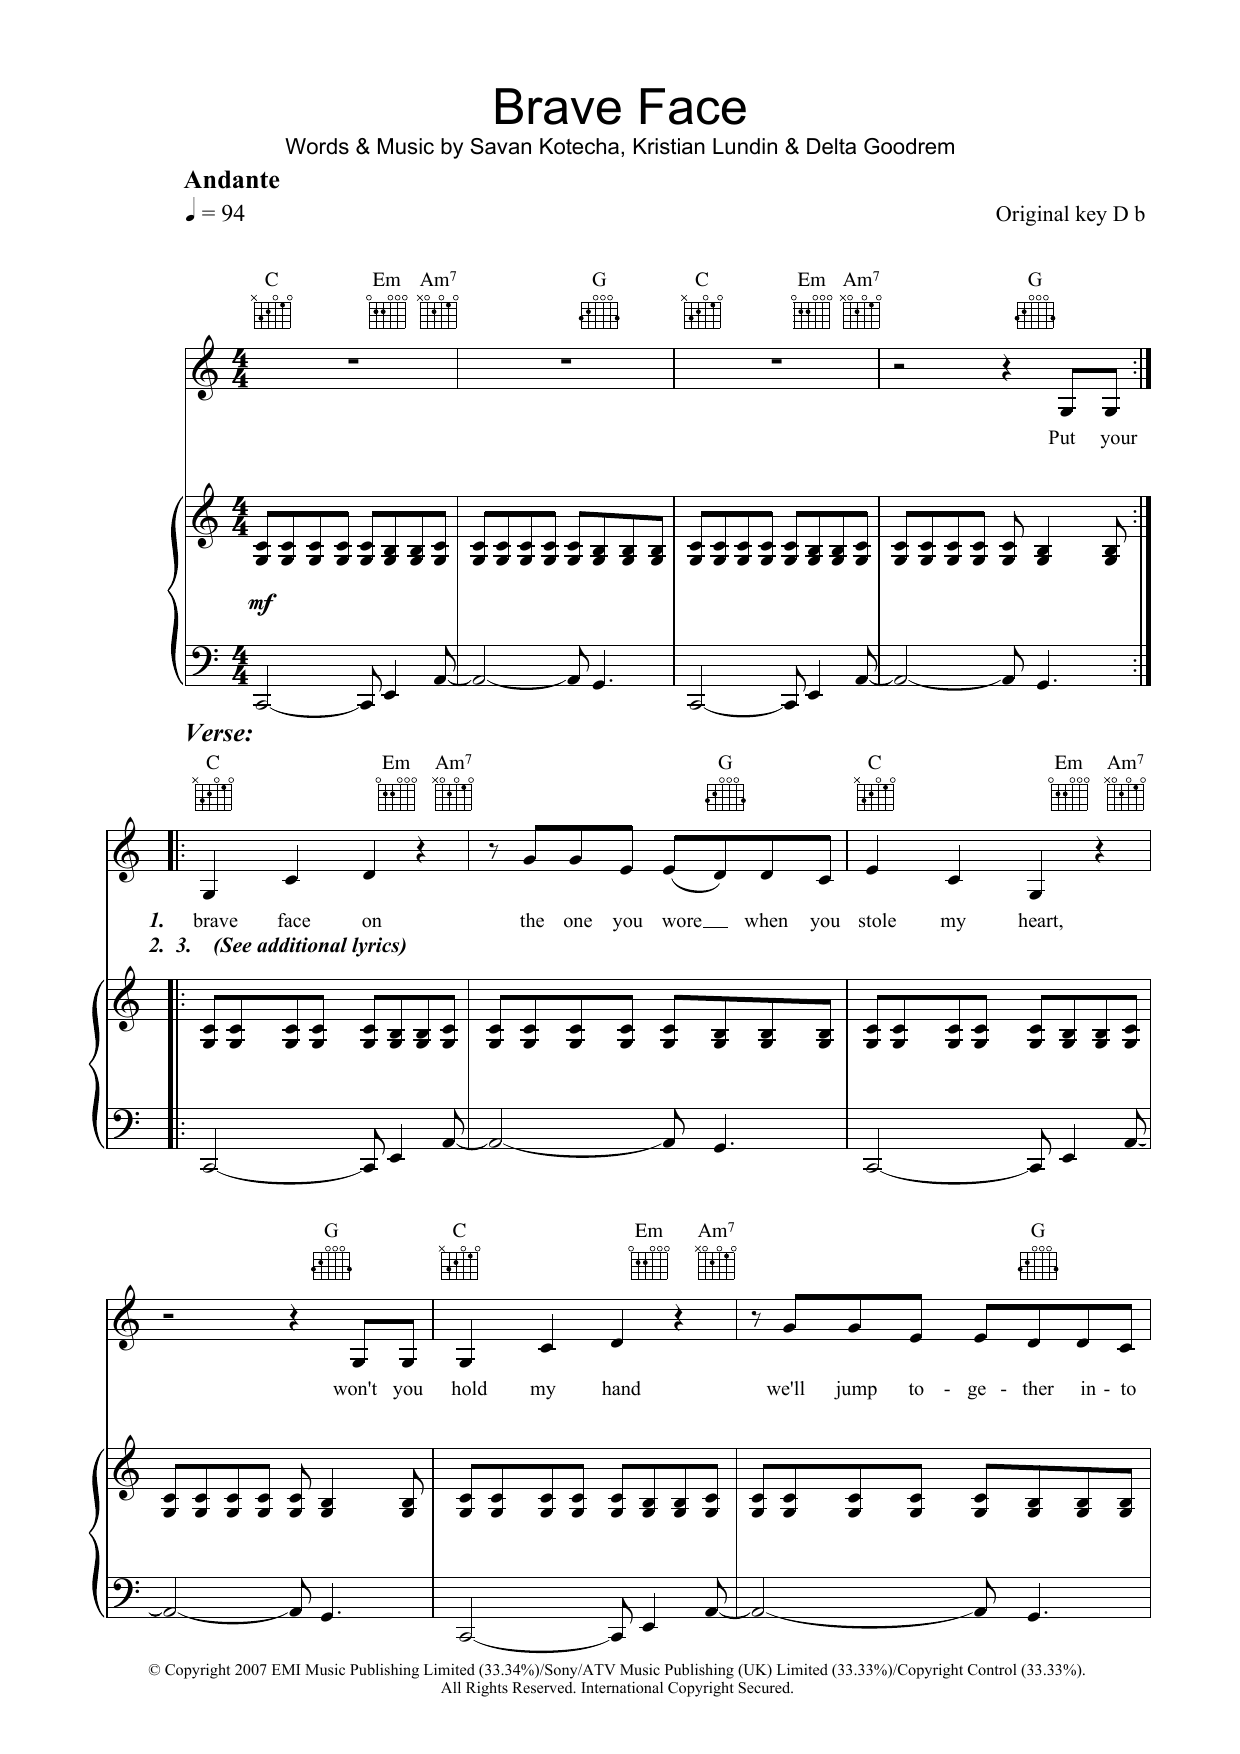 Delta Goodrem Brave Face Sheet Music Notes & Chords for Piano, Vocal & Guitar - Download or Print PDF